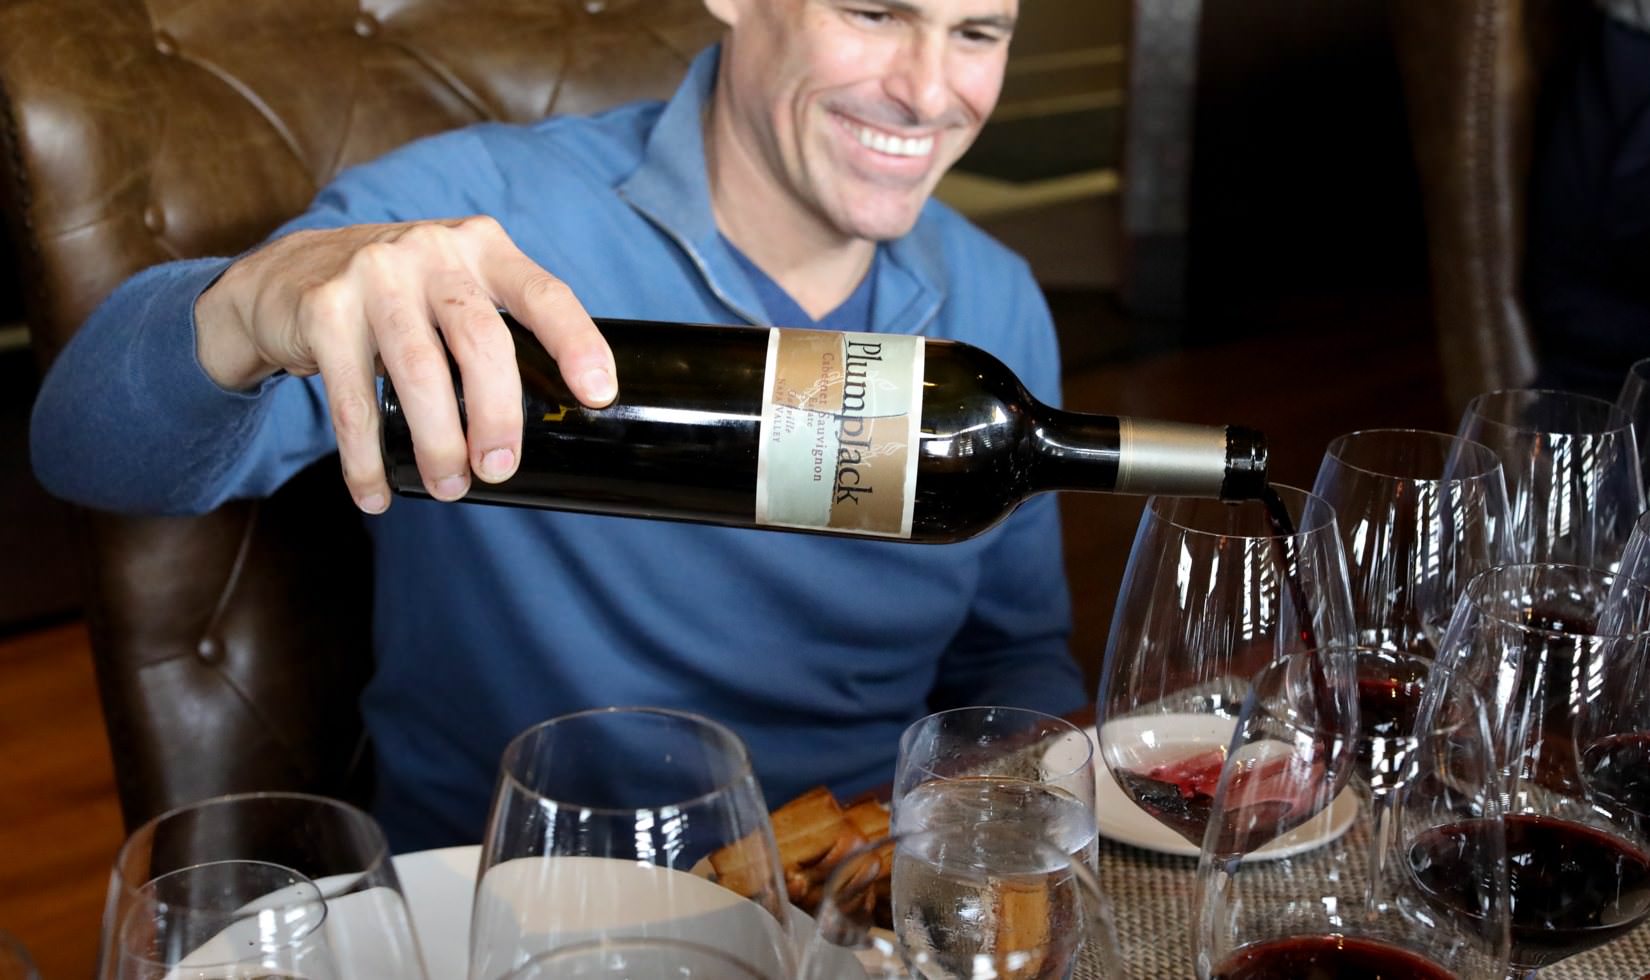 Jordan Winery Executive Chef Todd Knoll pouring Plumpjack Cabernet Sauvignon into a glass.